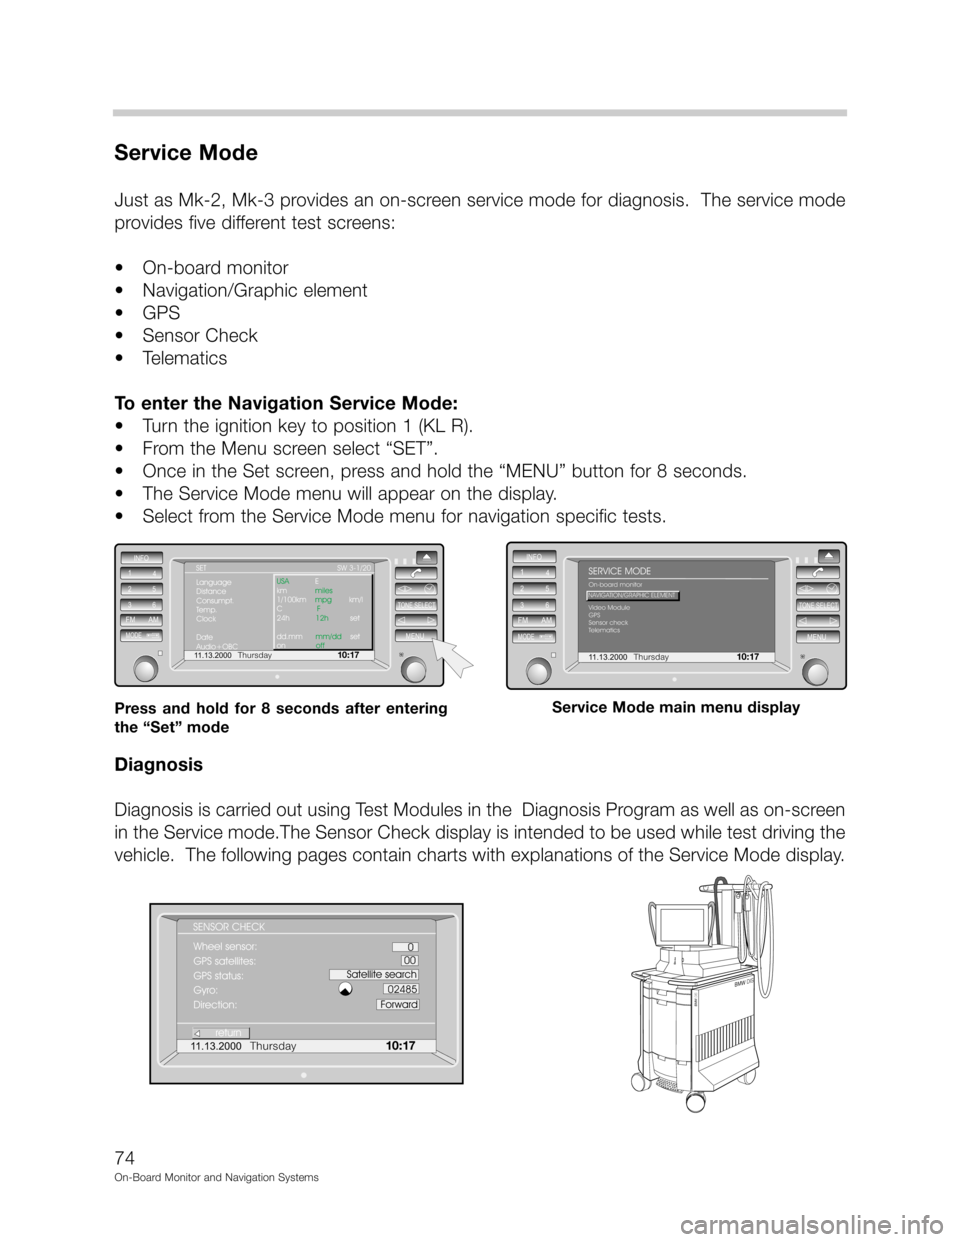 BMW 5 SERIES 1998 E39 On Board Monitor System Manual PDF ,:



"&
(	
, 	
R969.
&


&	
#&	

&&


 
	

